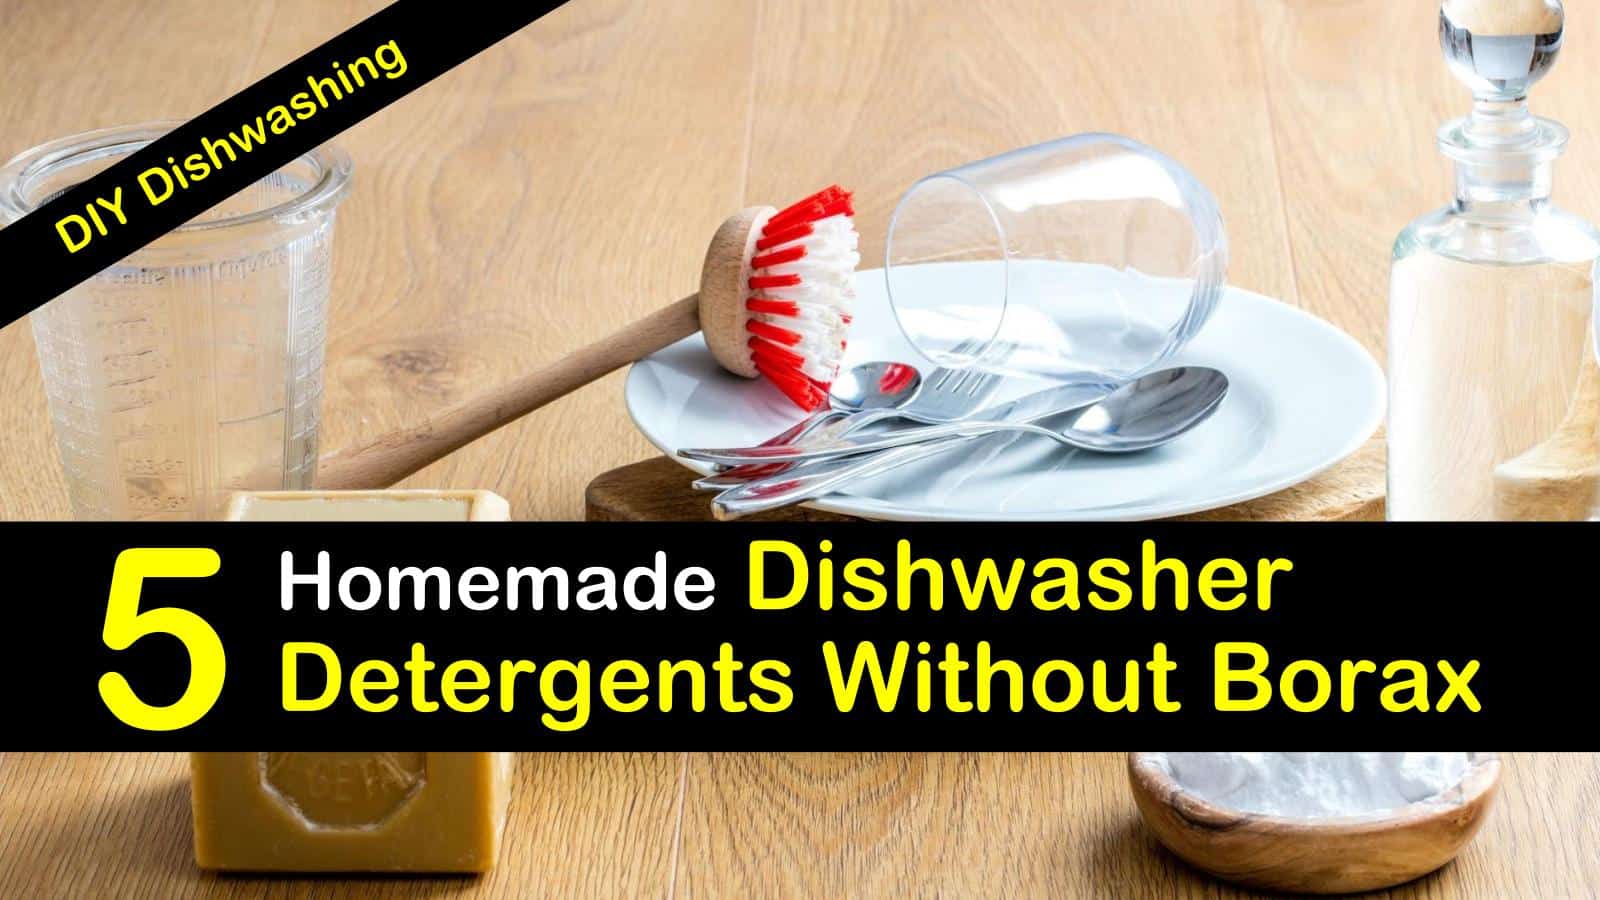 homemade dishwasher detergent without borax titleimg1